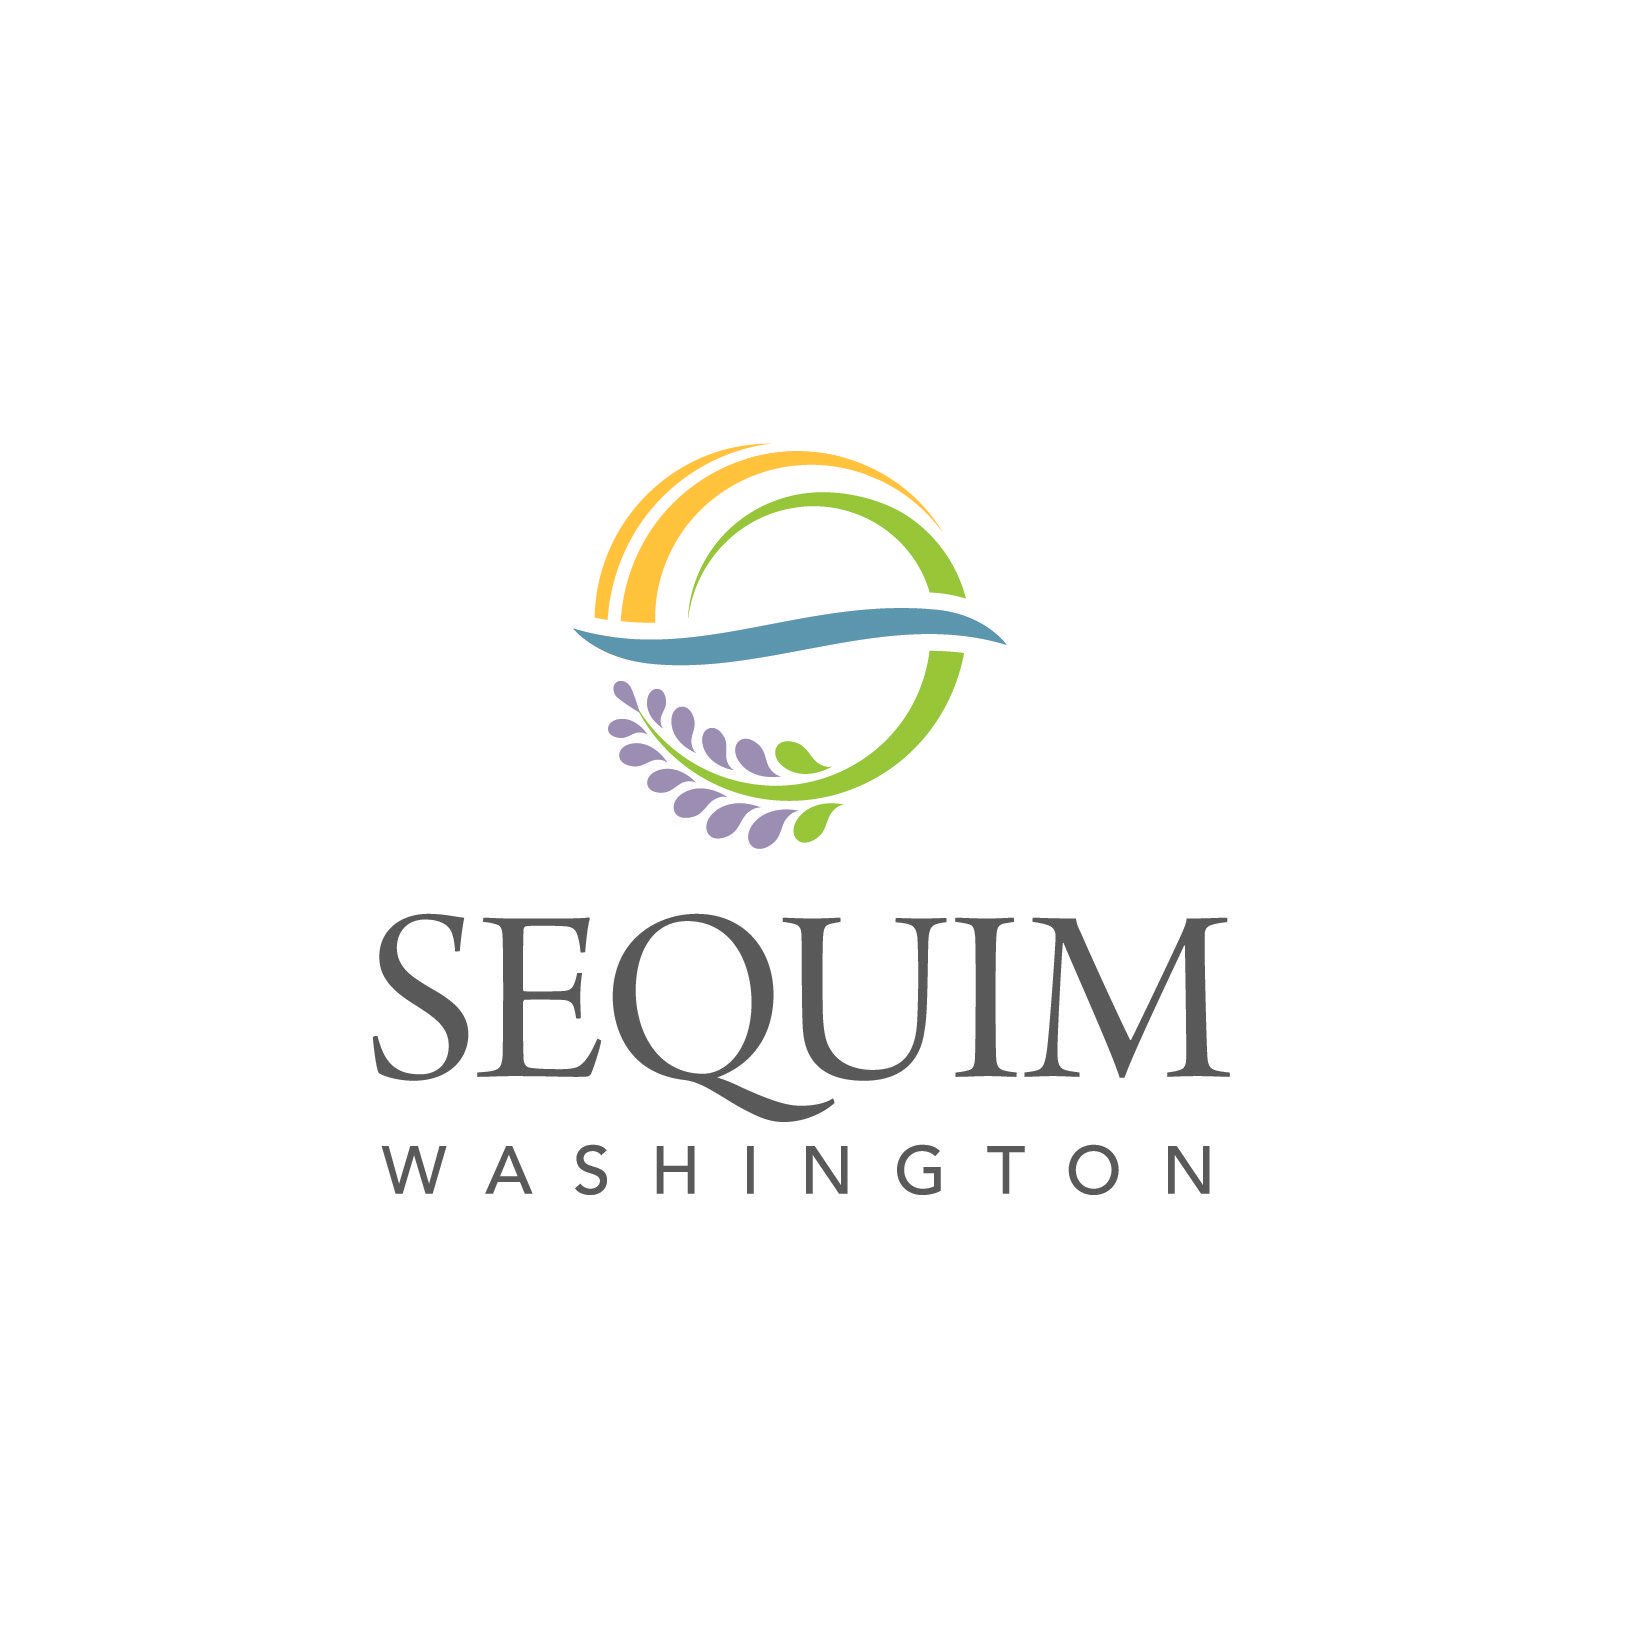 Sequim Logo - City of Sequim Tourism Enhancement Grant Fund. Sequim, WA